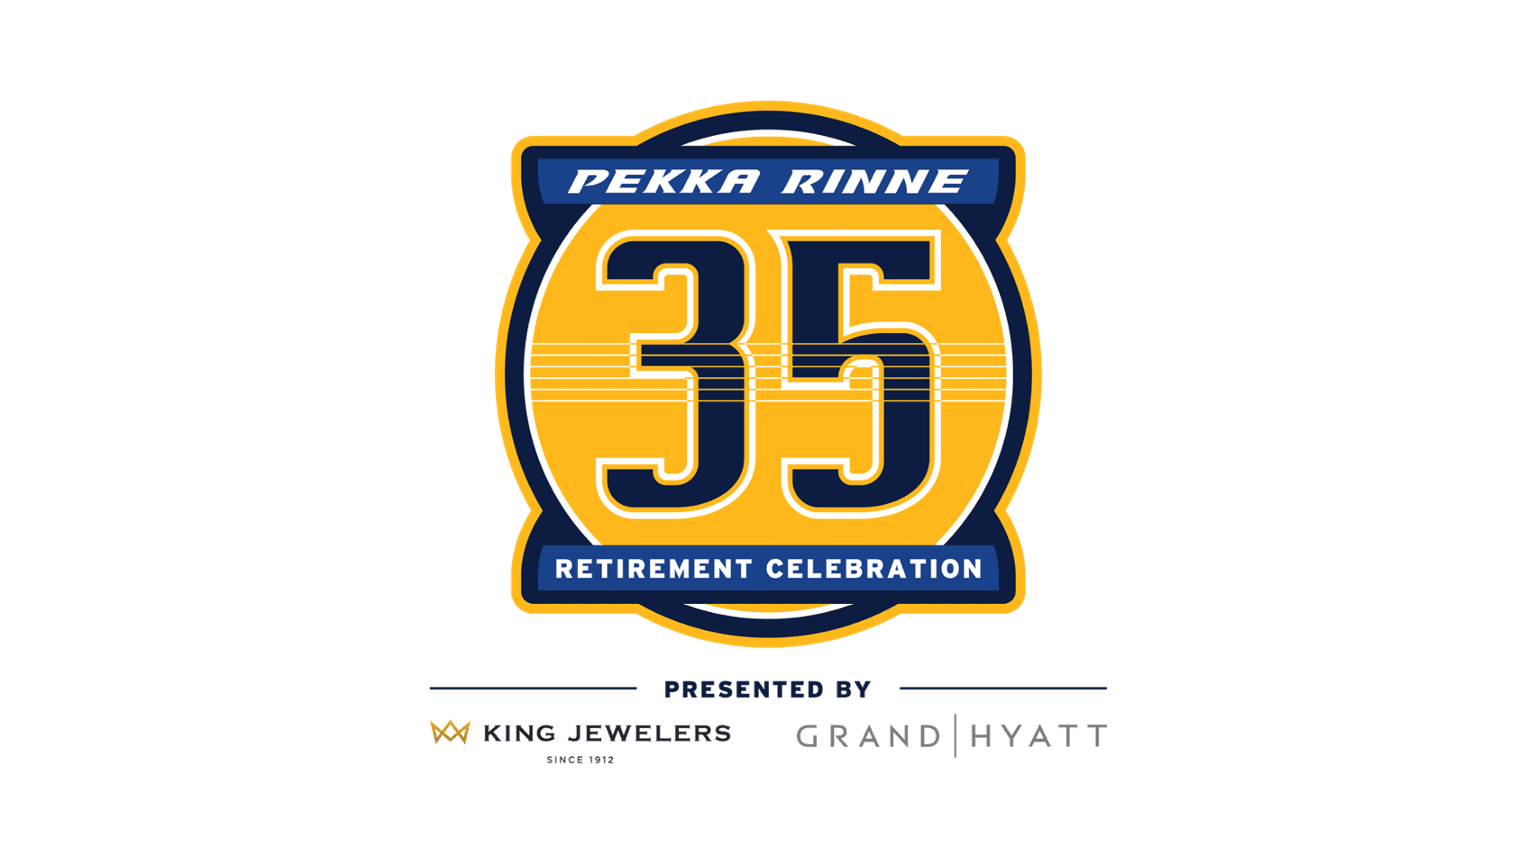 Pekka Rinne 35 Retirement Celebration Presented by King Jewelers and Grand Hyatt Hotel